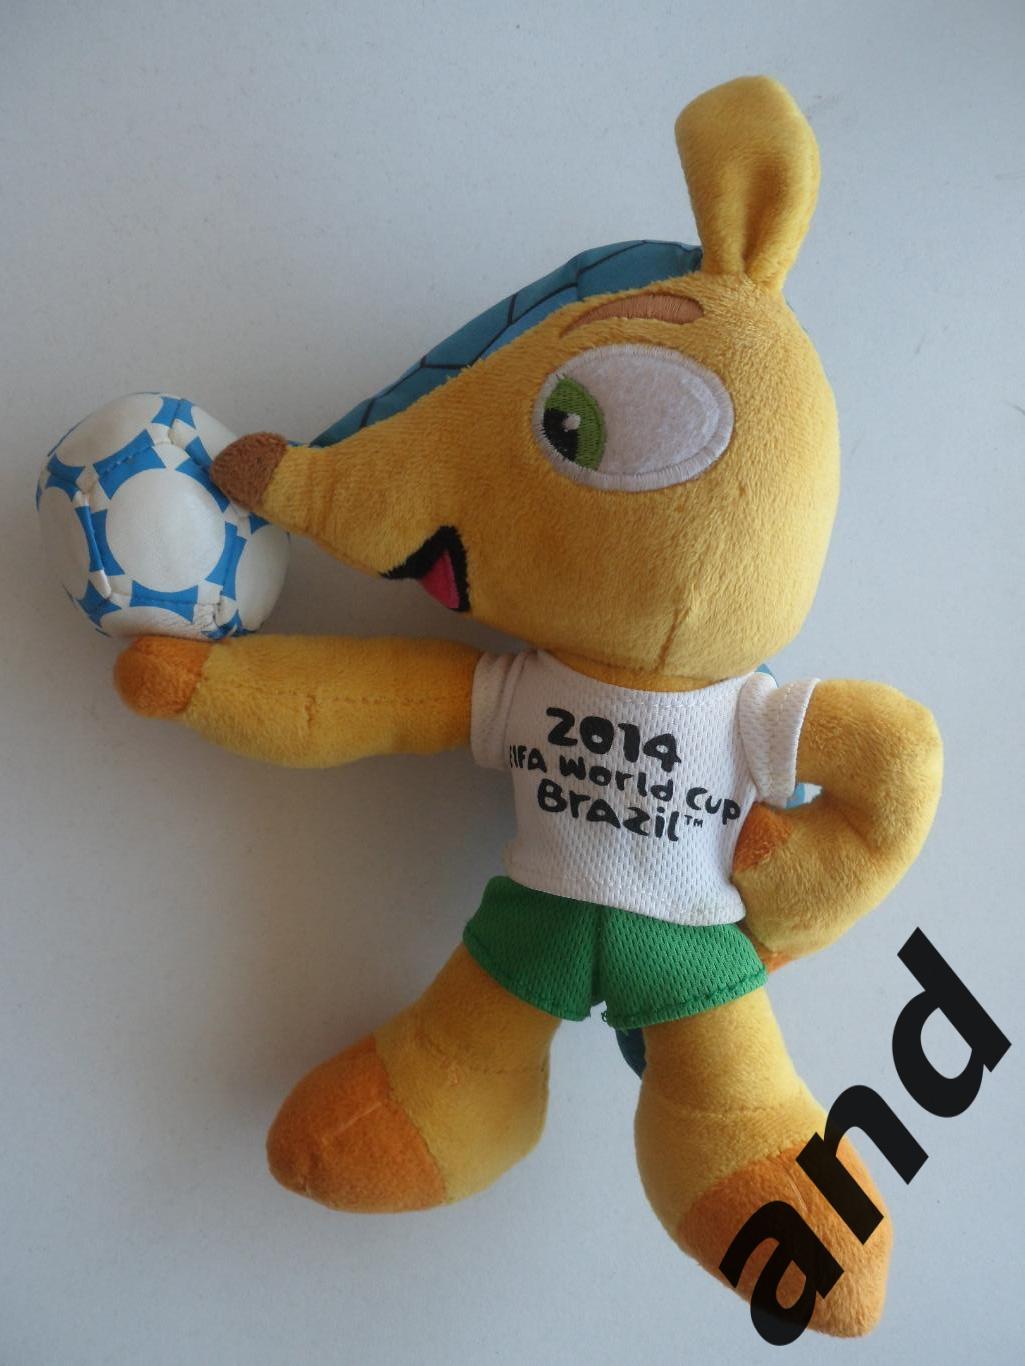 маскот Фулеко. игрушка-талисман Чемпионата мира по футболу 2014